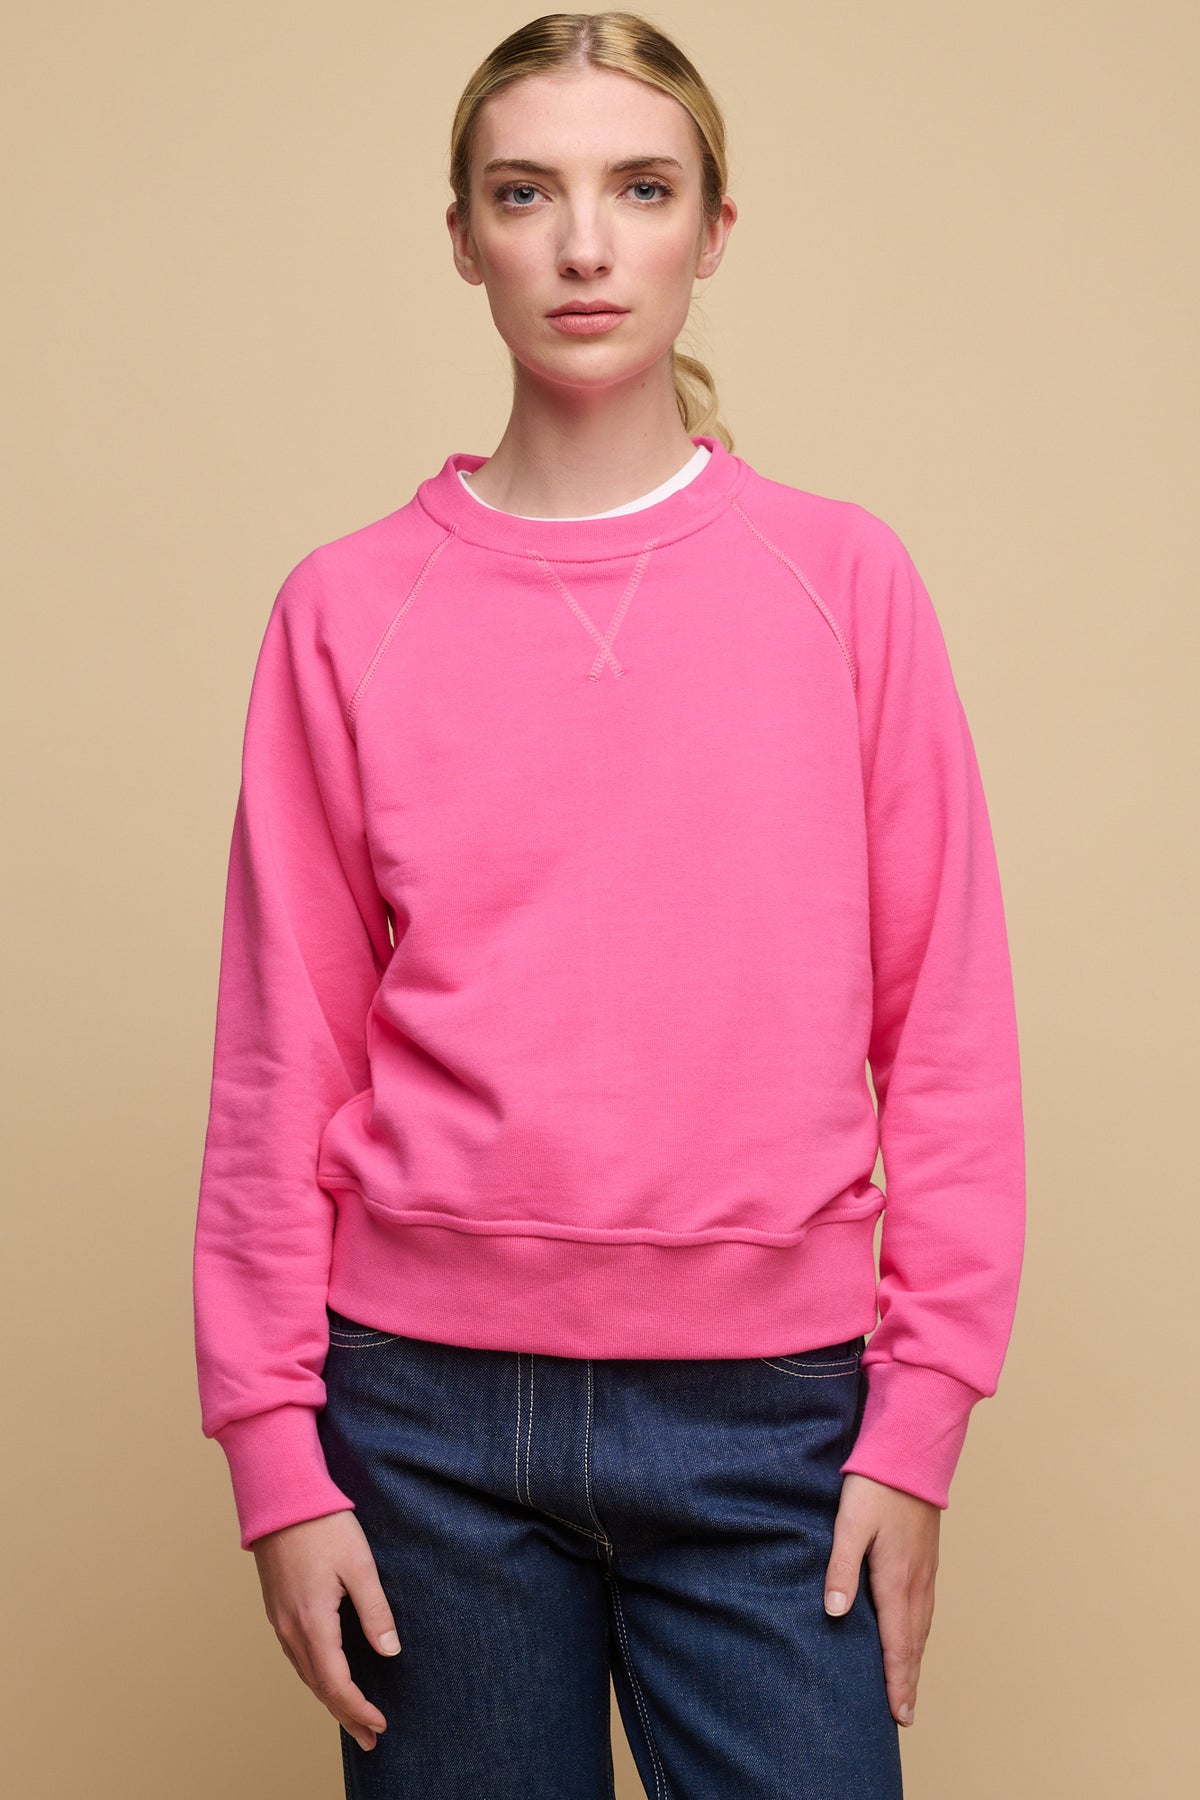 
            Thigh up of female wearing raglan sweatshirt in fuchsia pink worn over crew neck t shirt in white